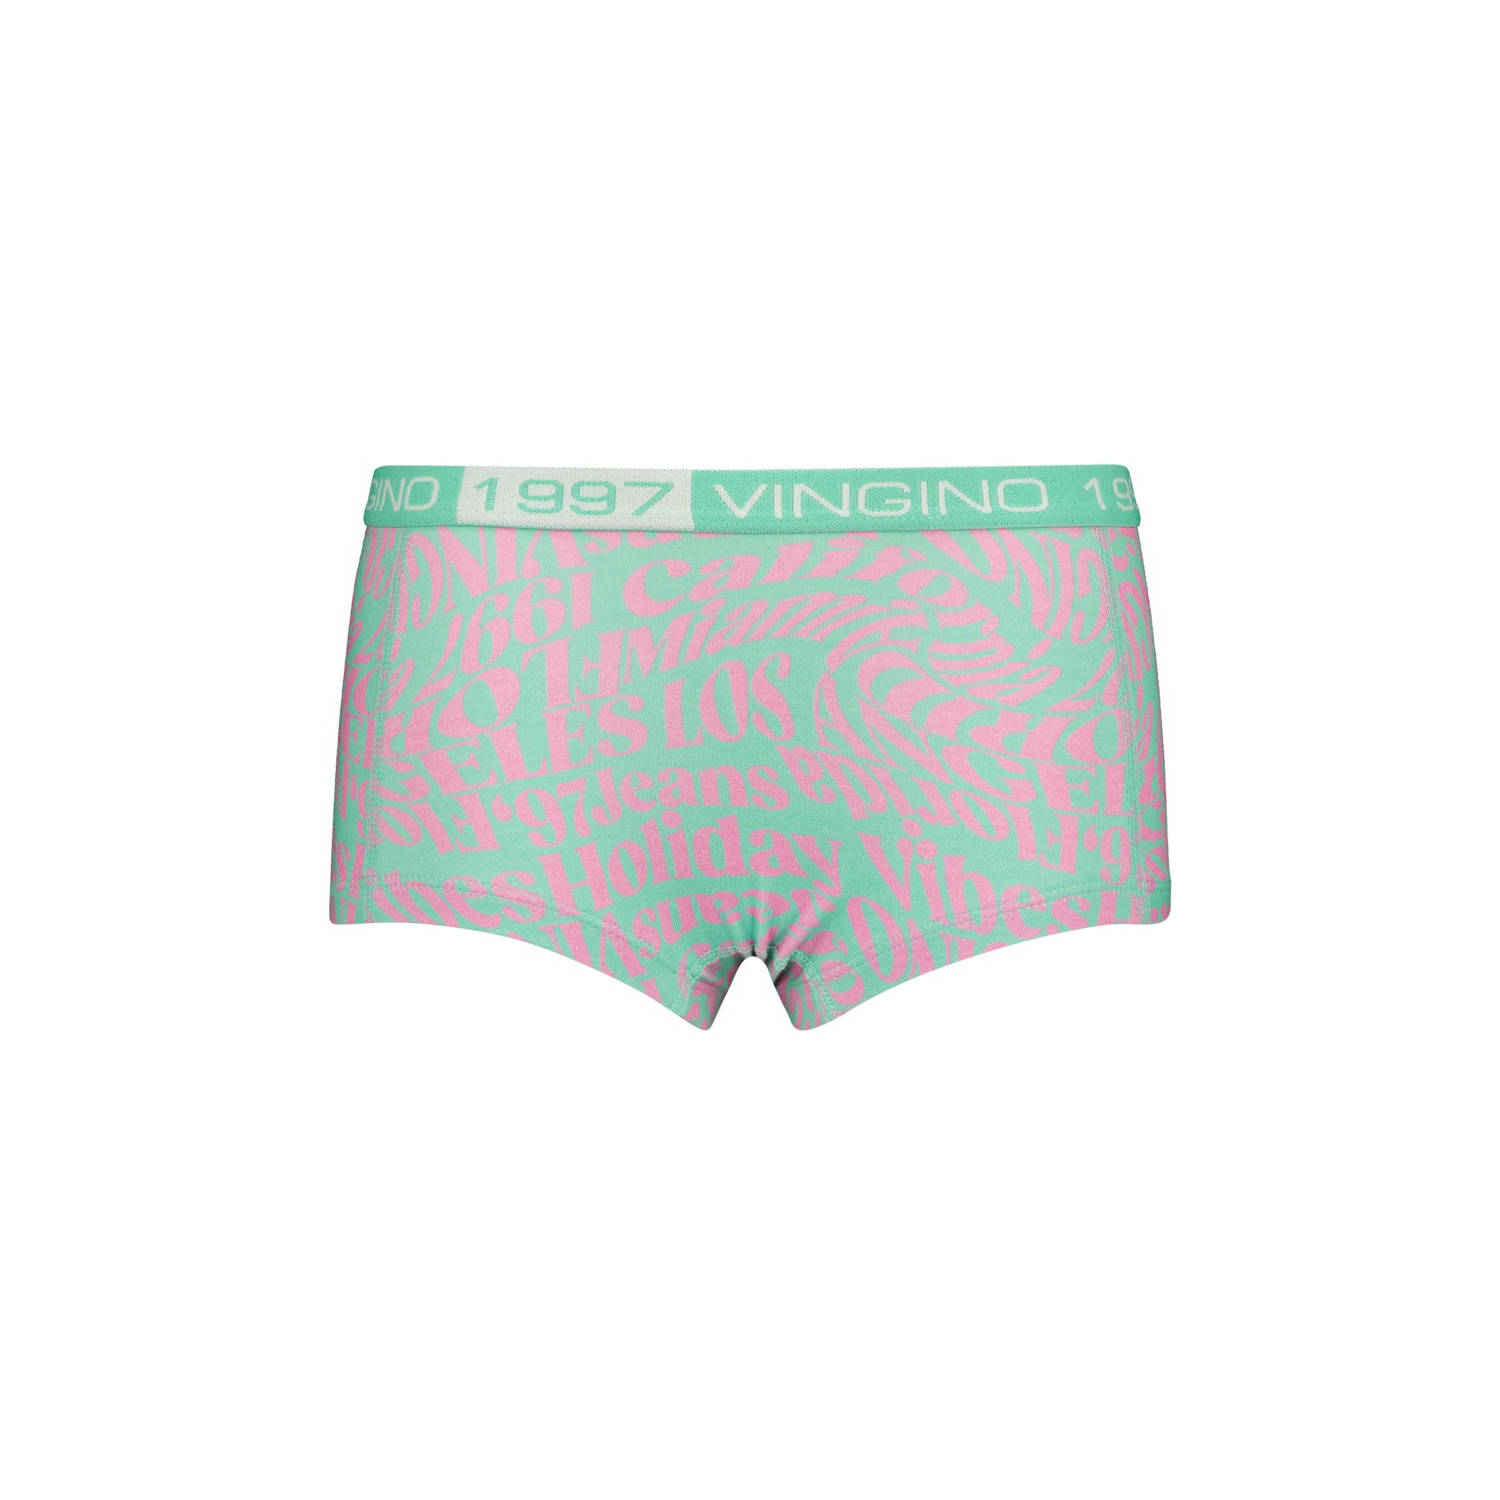 Vingino bh top + 2 shorts Holiday mintgroen roze